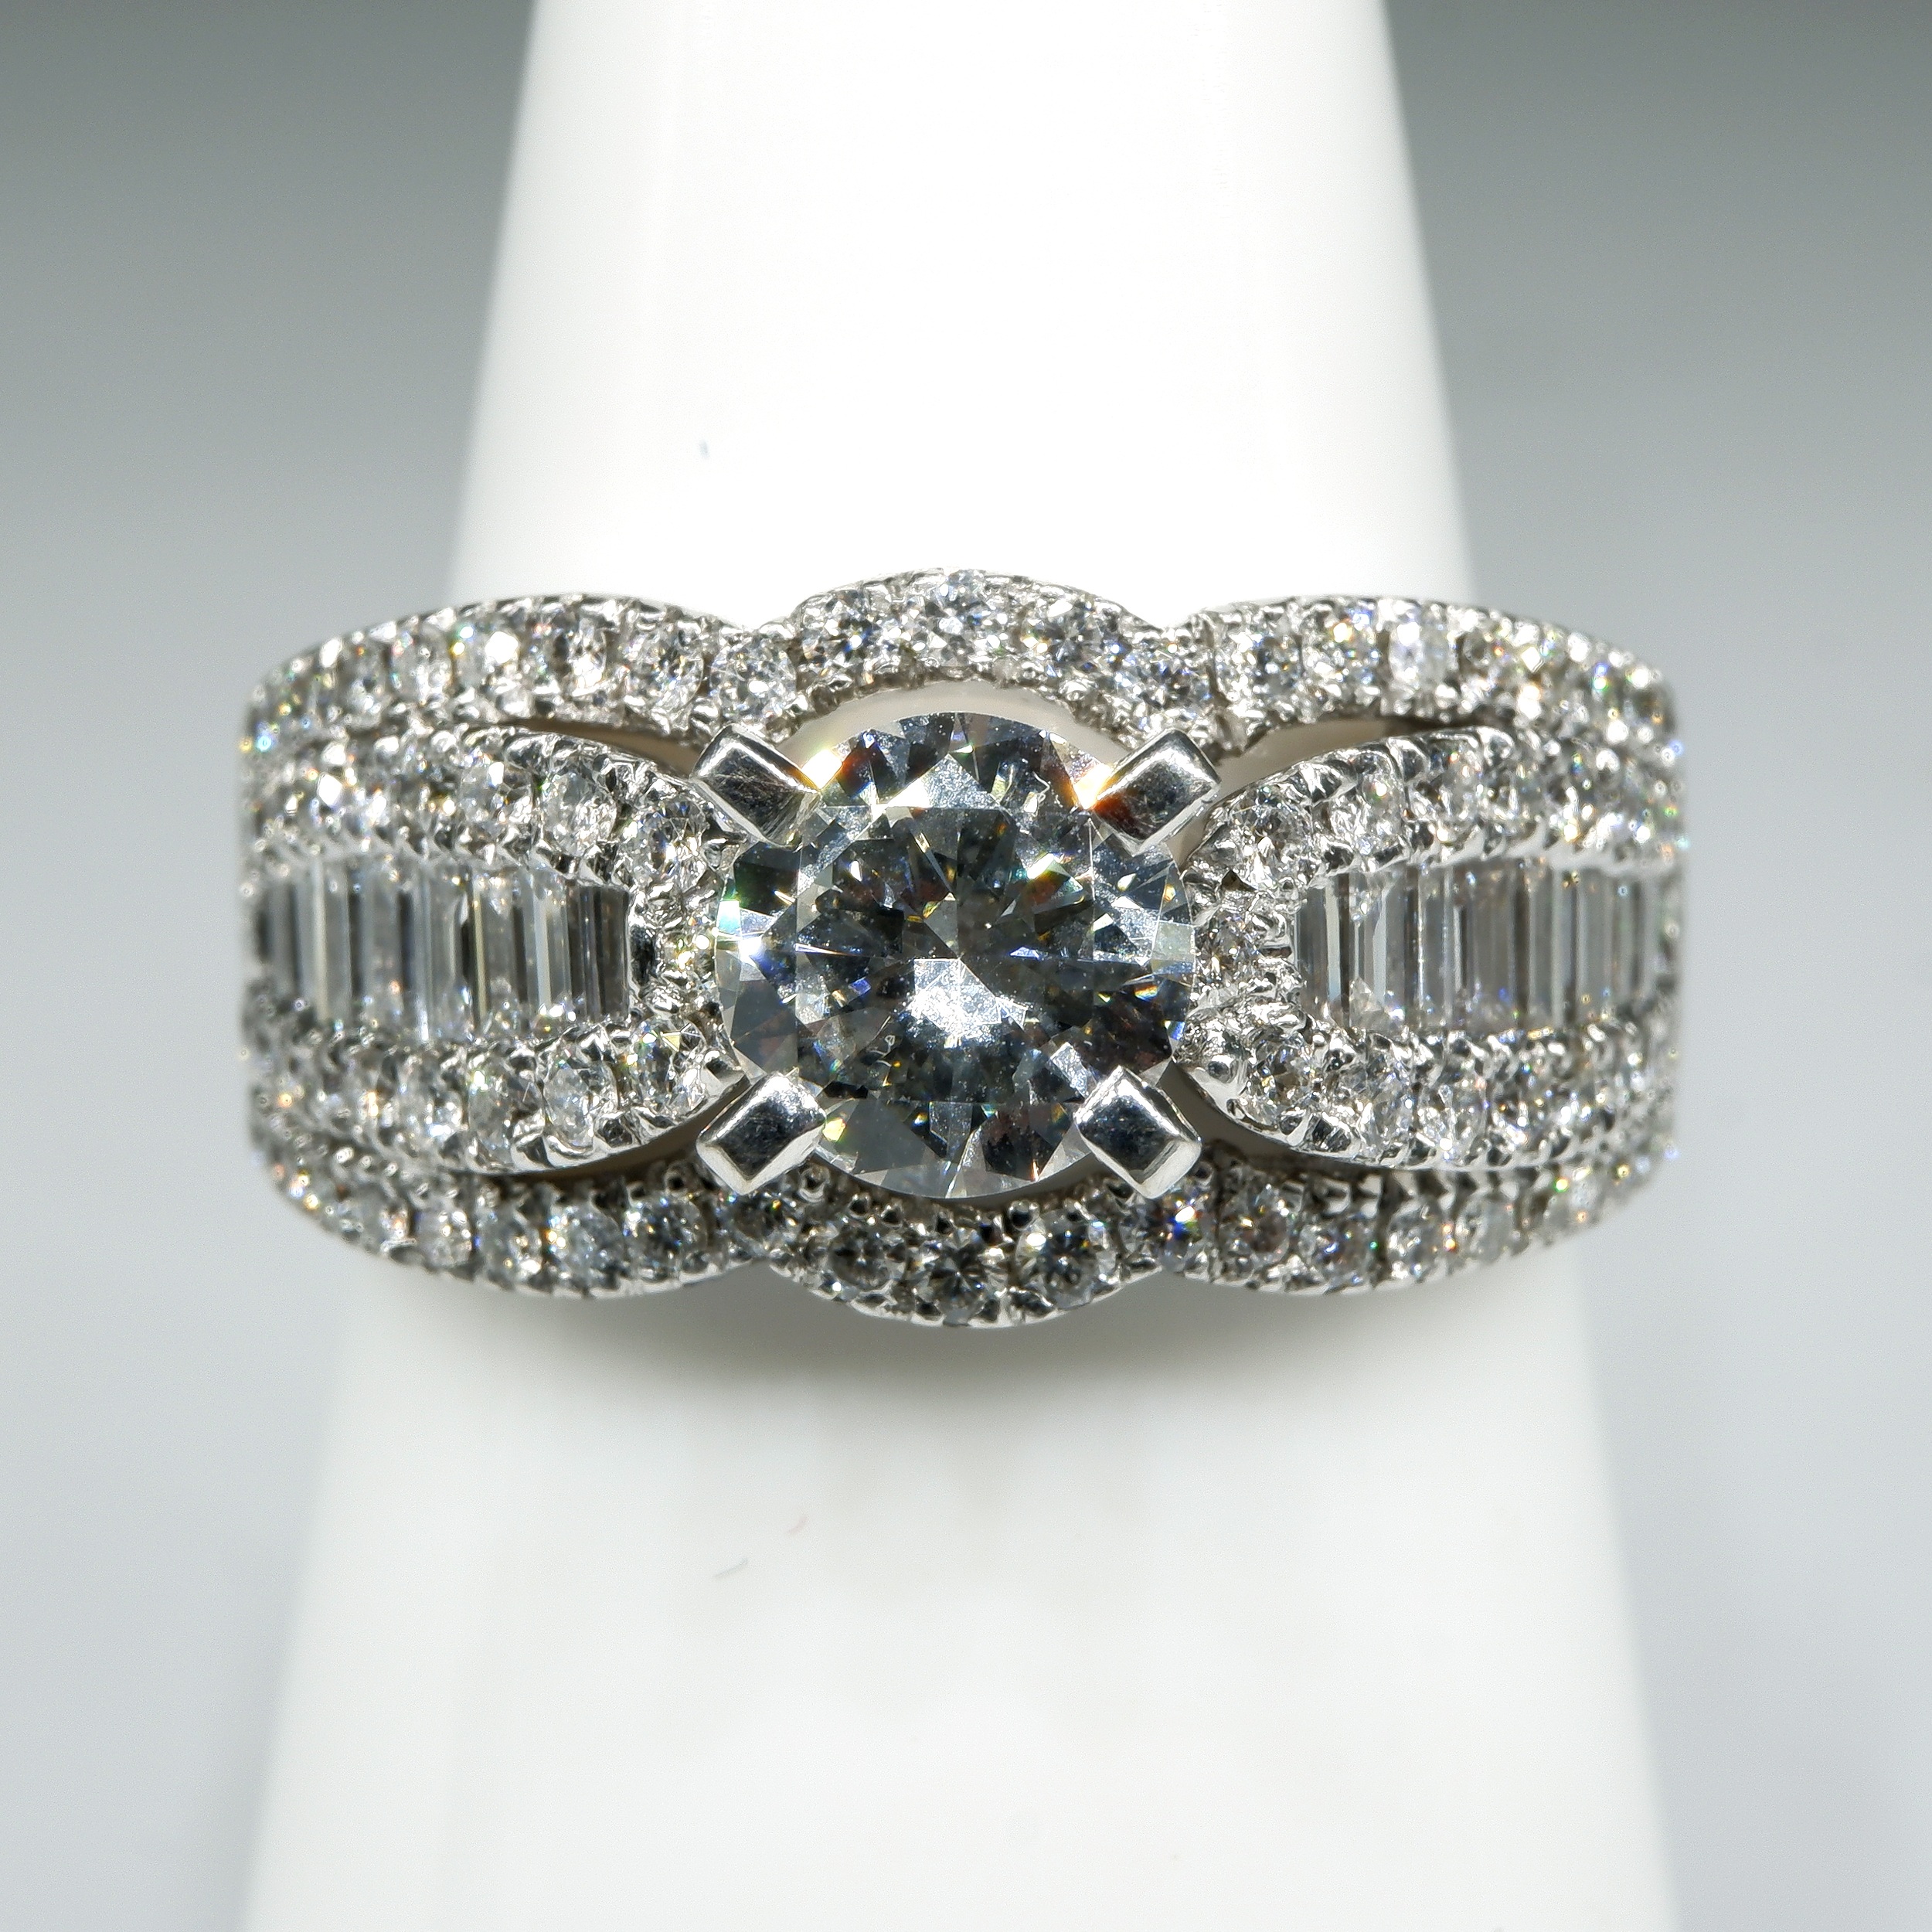 '14ct White Gold Diamond Ring, with at Centre Modern Brilliant Cut Diamond 0.75ct (G/H VS2), 6.9g'